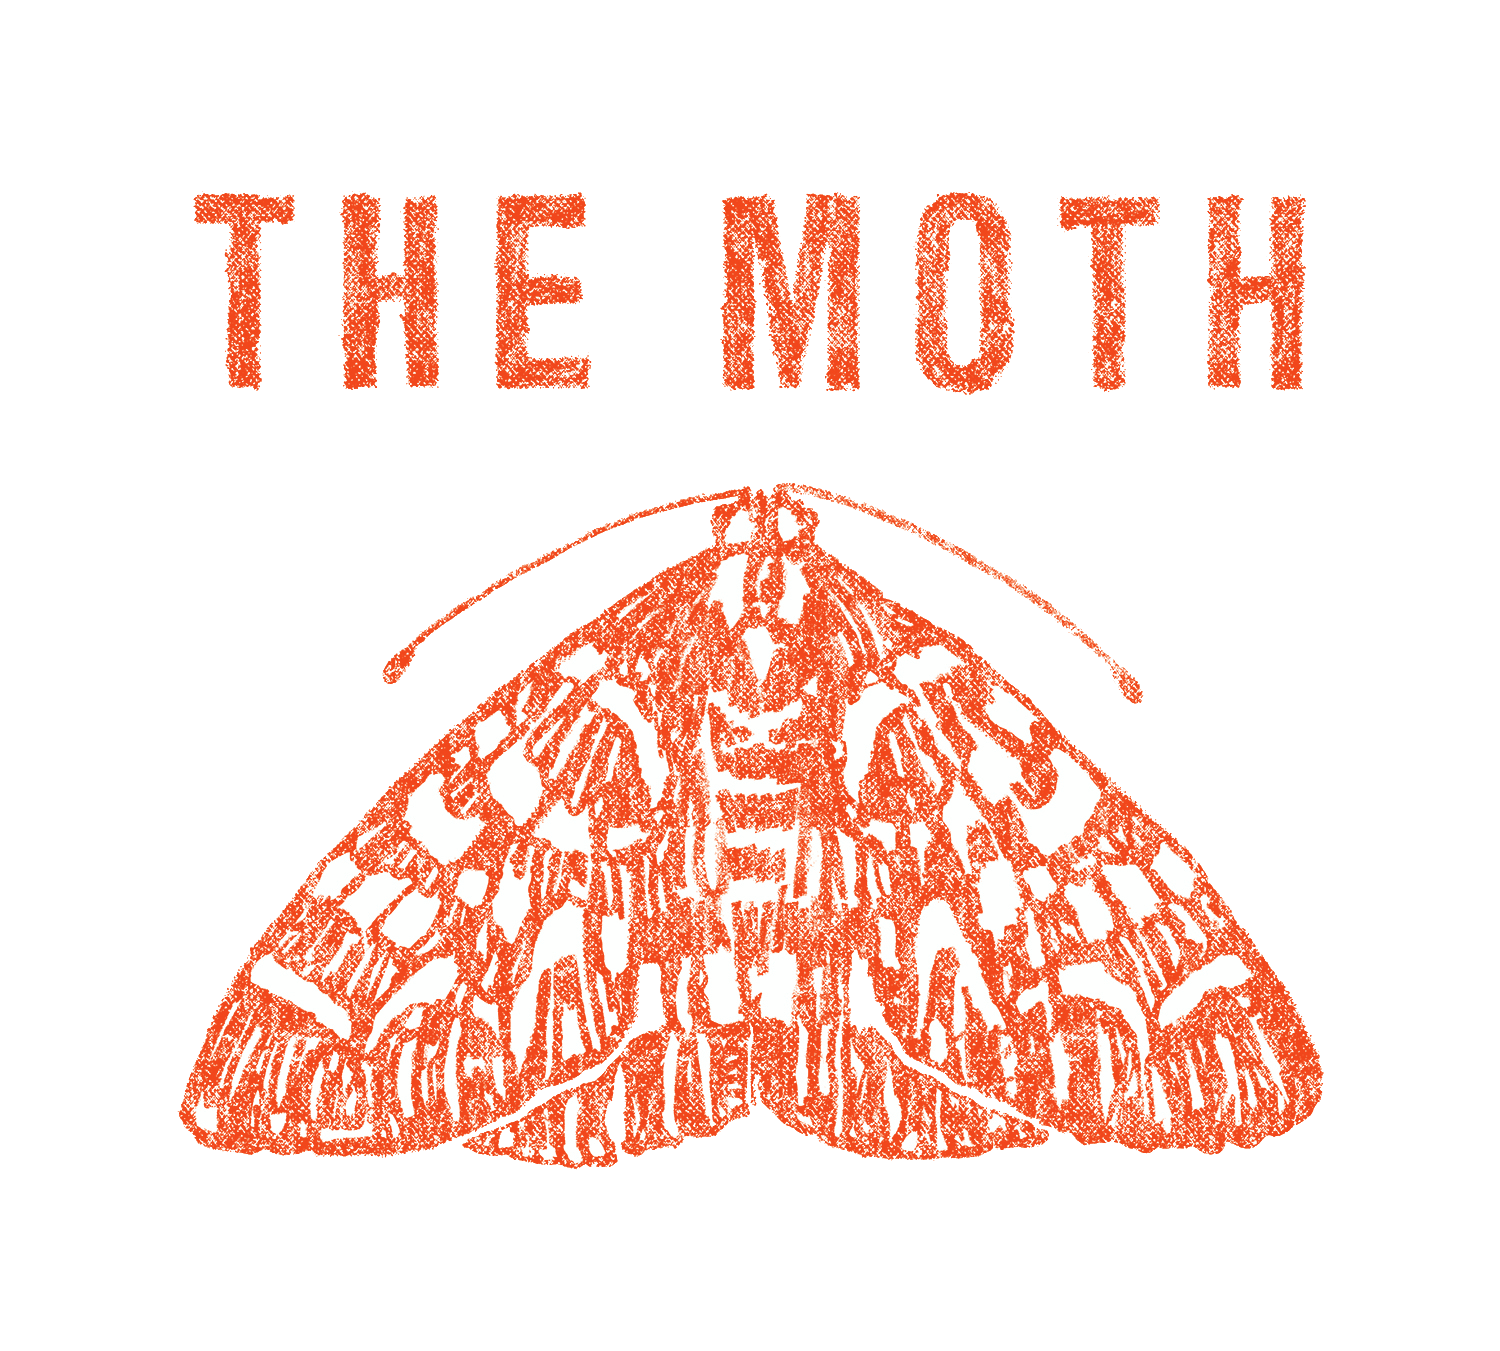 The Moth logo